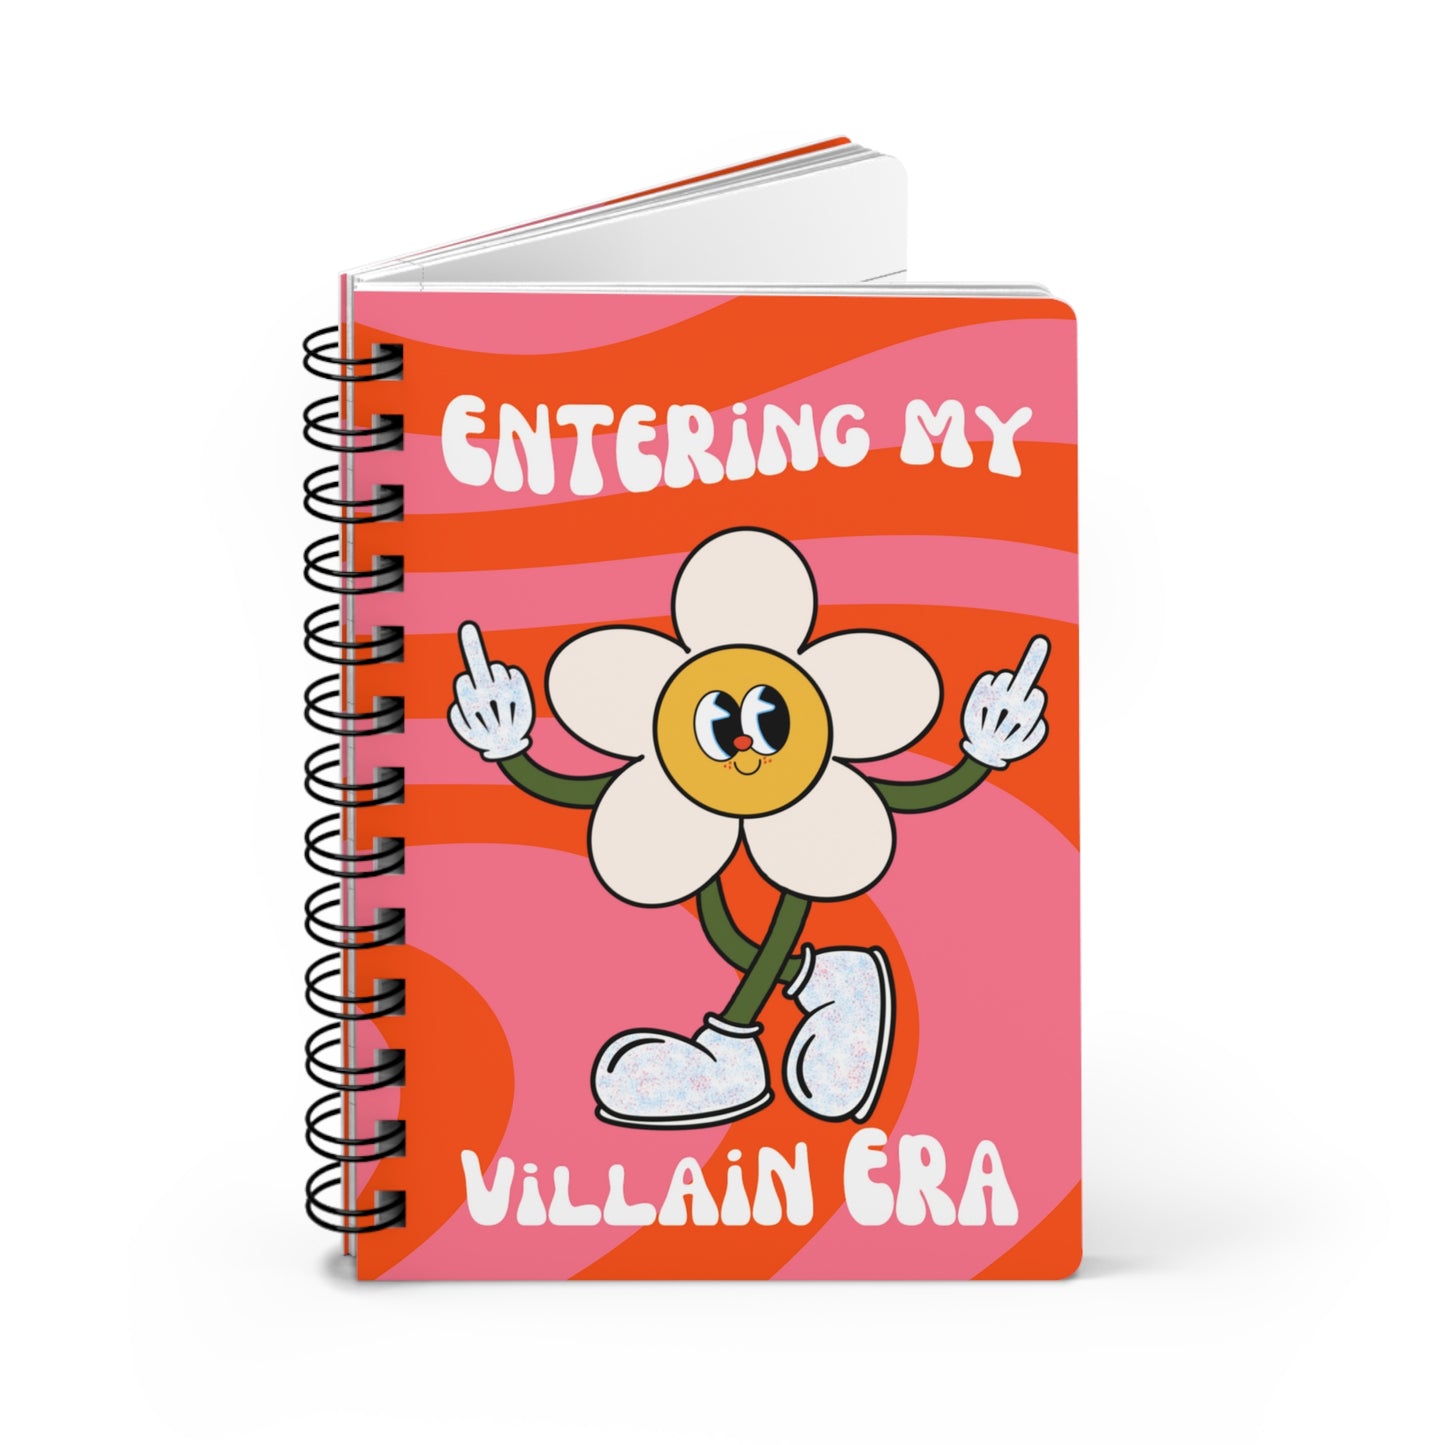 Entering My Villain Era - Notebook